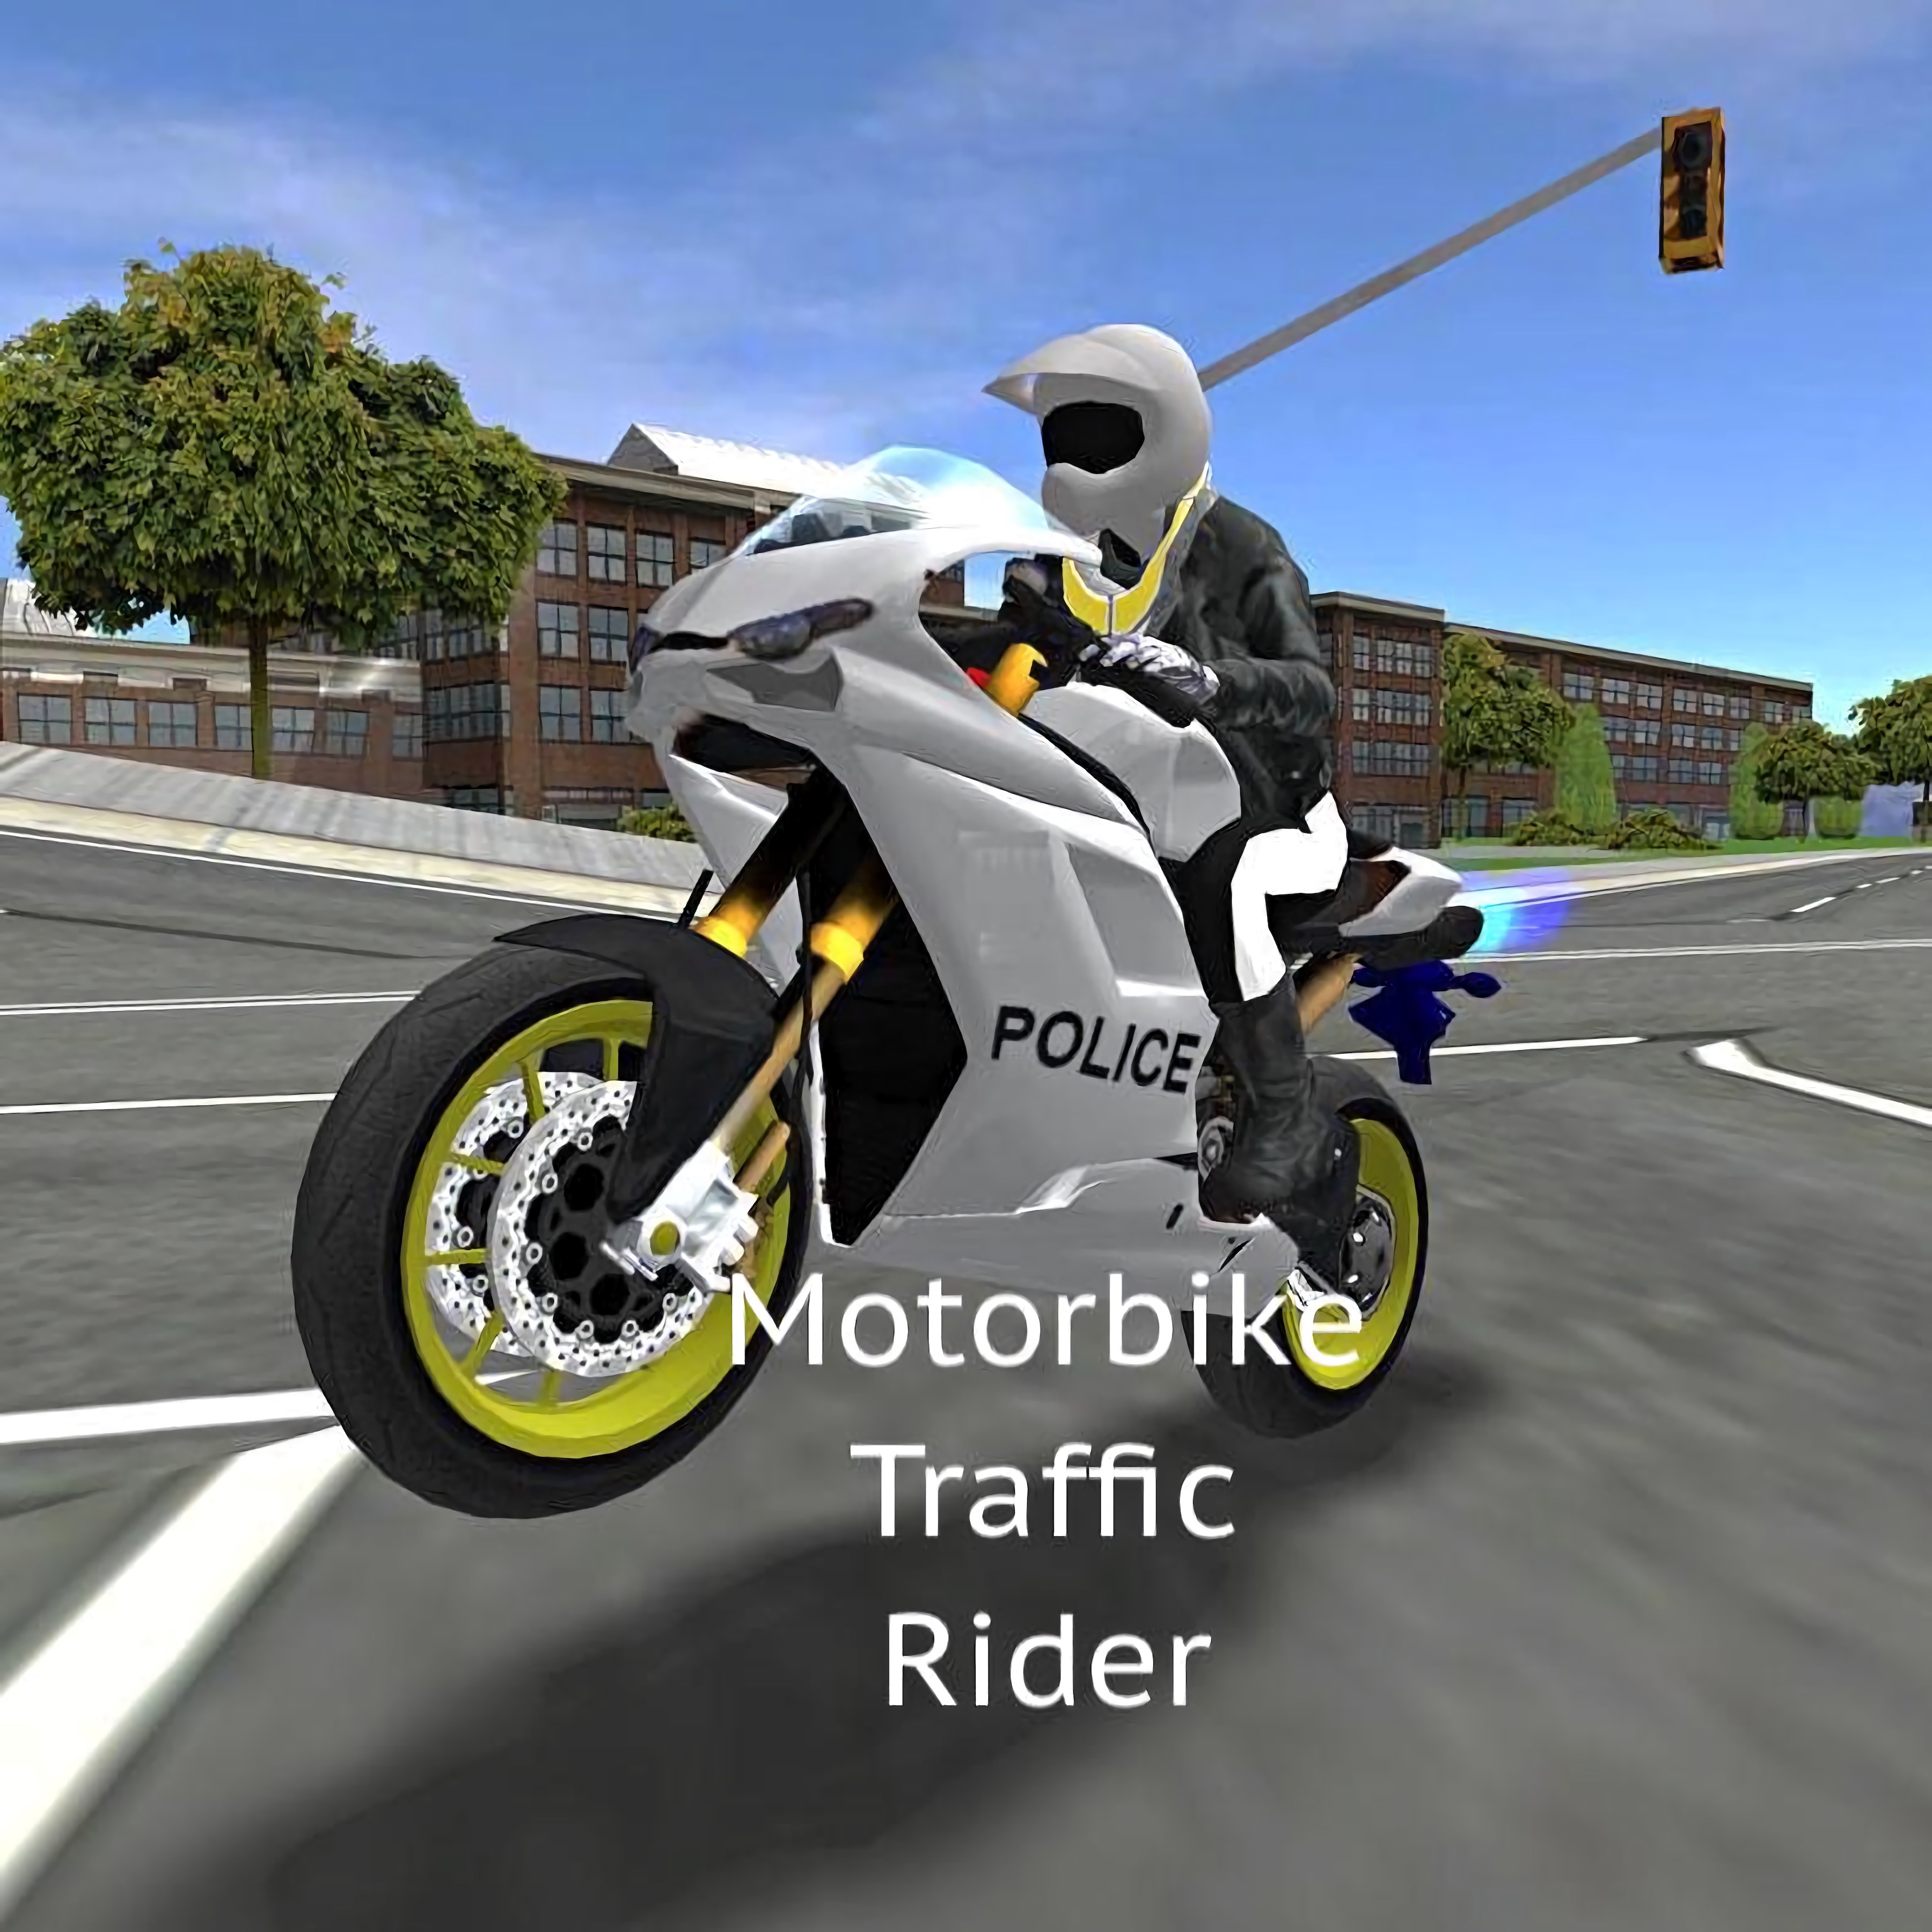 Police Motorbike Traffic Rider game play at